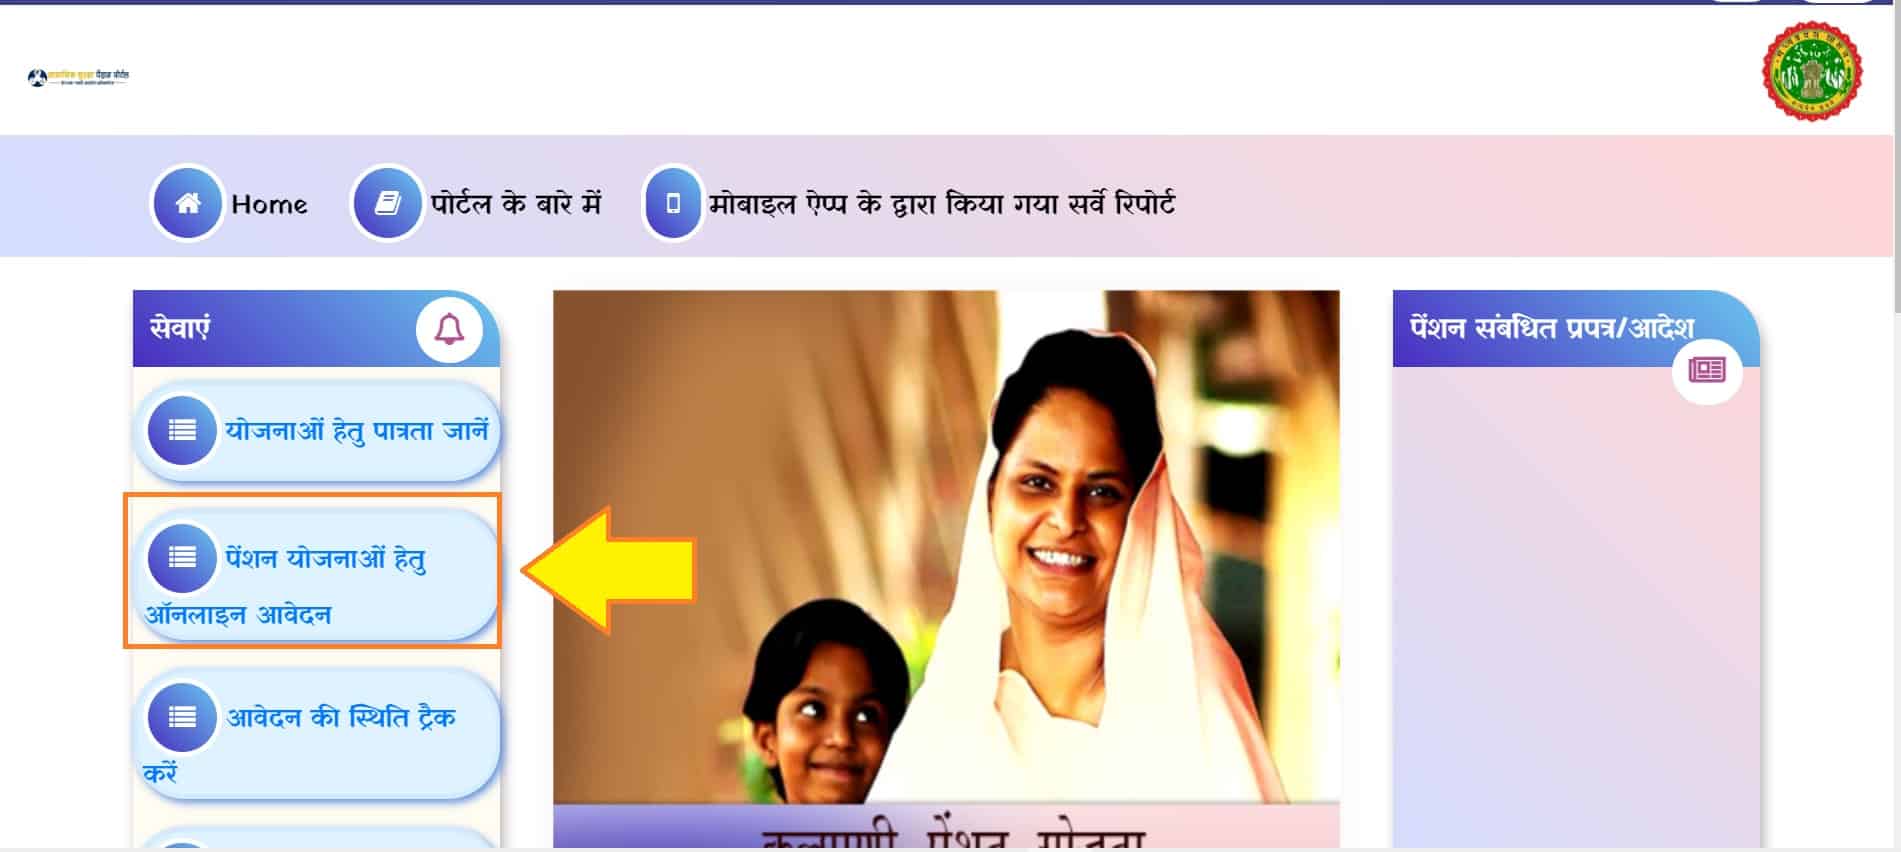 ऑनलाइन आवेदन वृद्धा पेंशन योजना  ऑनलाइन आवेदन Madhya Pradesh Vridha Pension Yojna ऑनलाइन आवेदन वृद्धा पेंशन योजना 